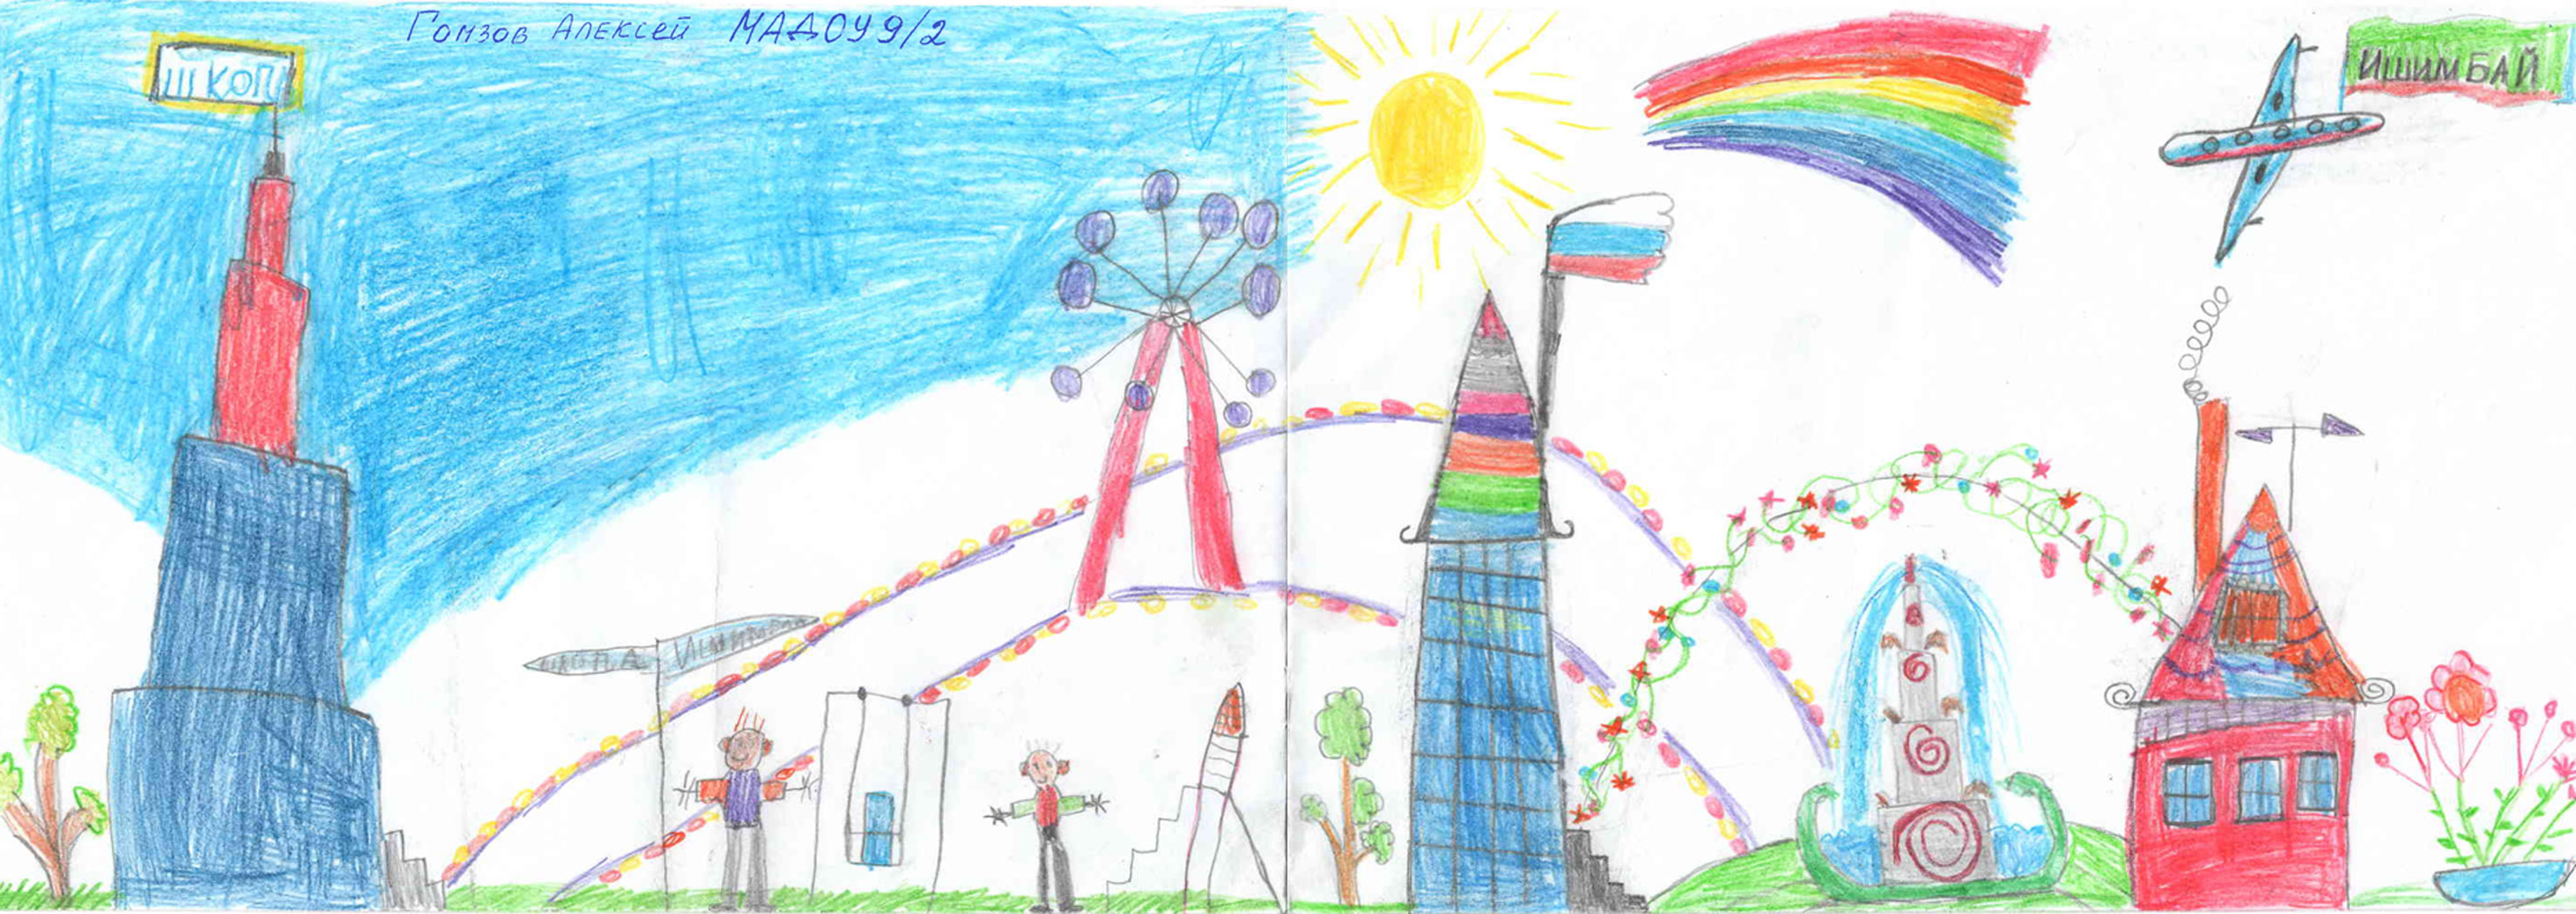 Конкурс детского рисунка город будущего Самара